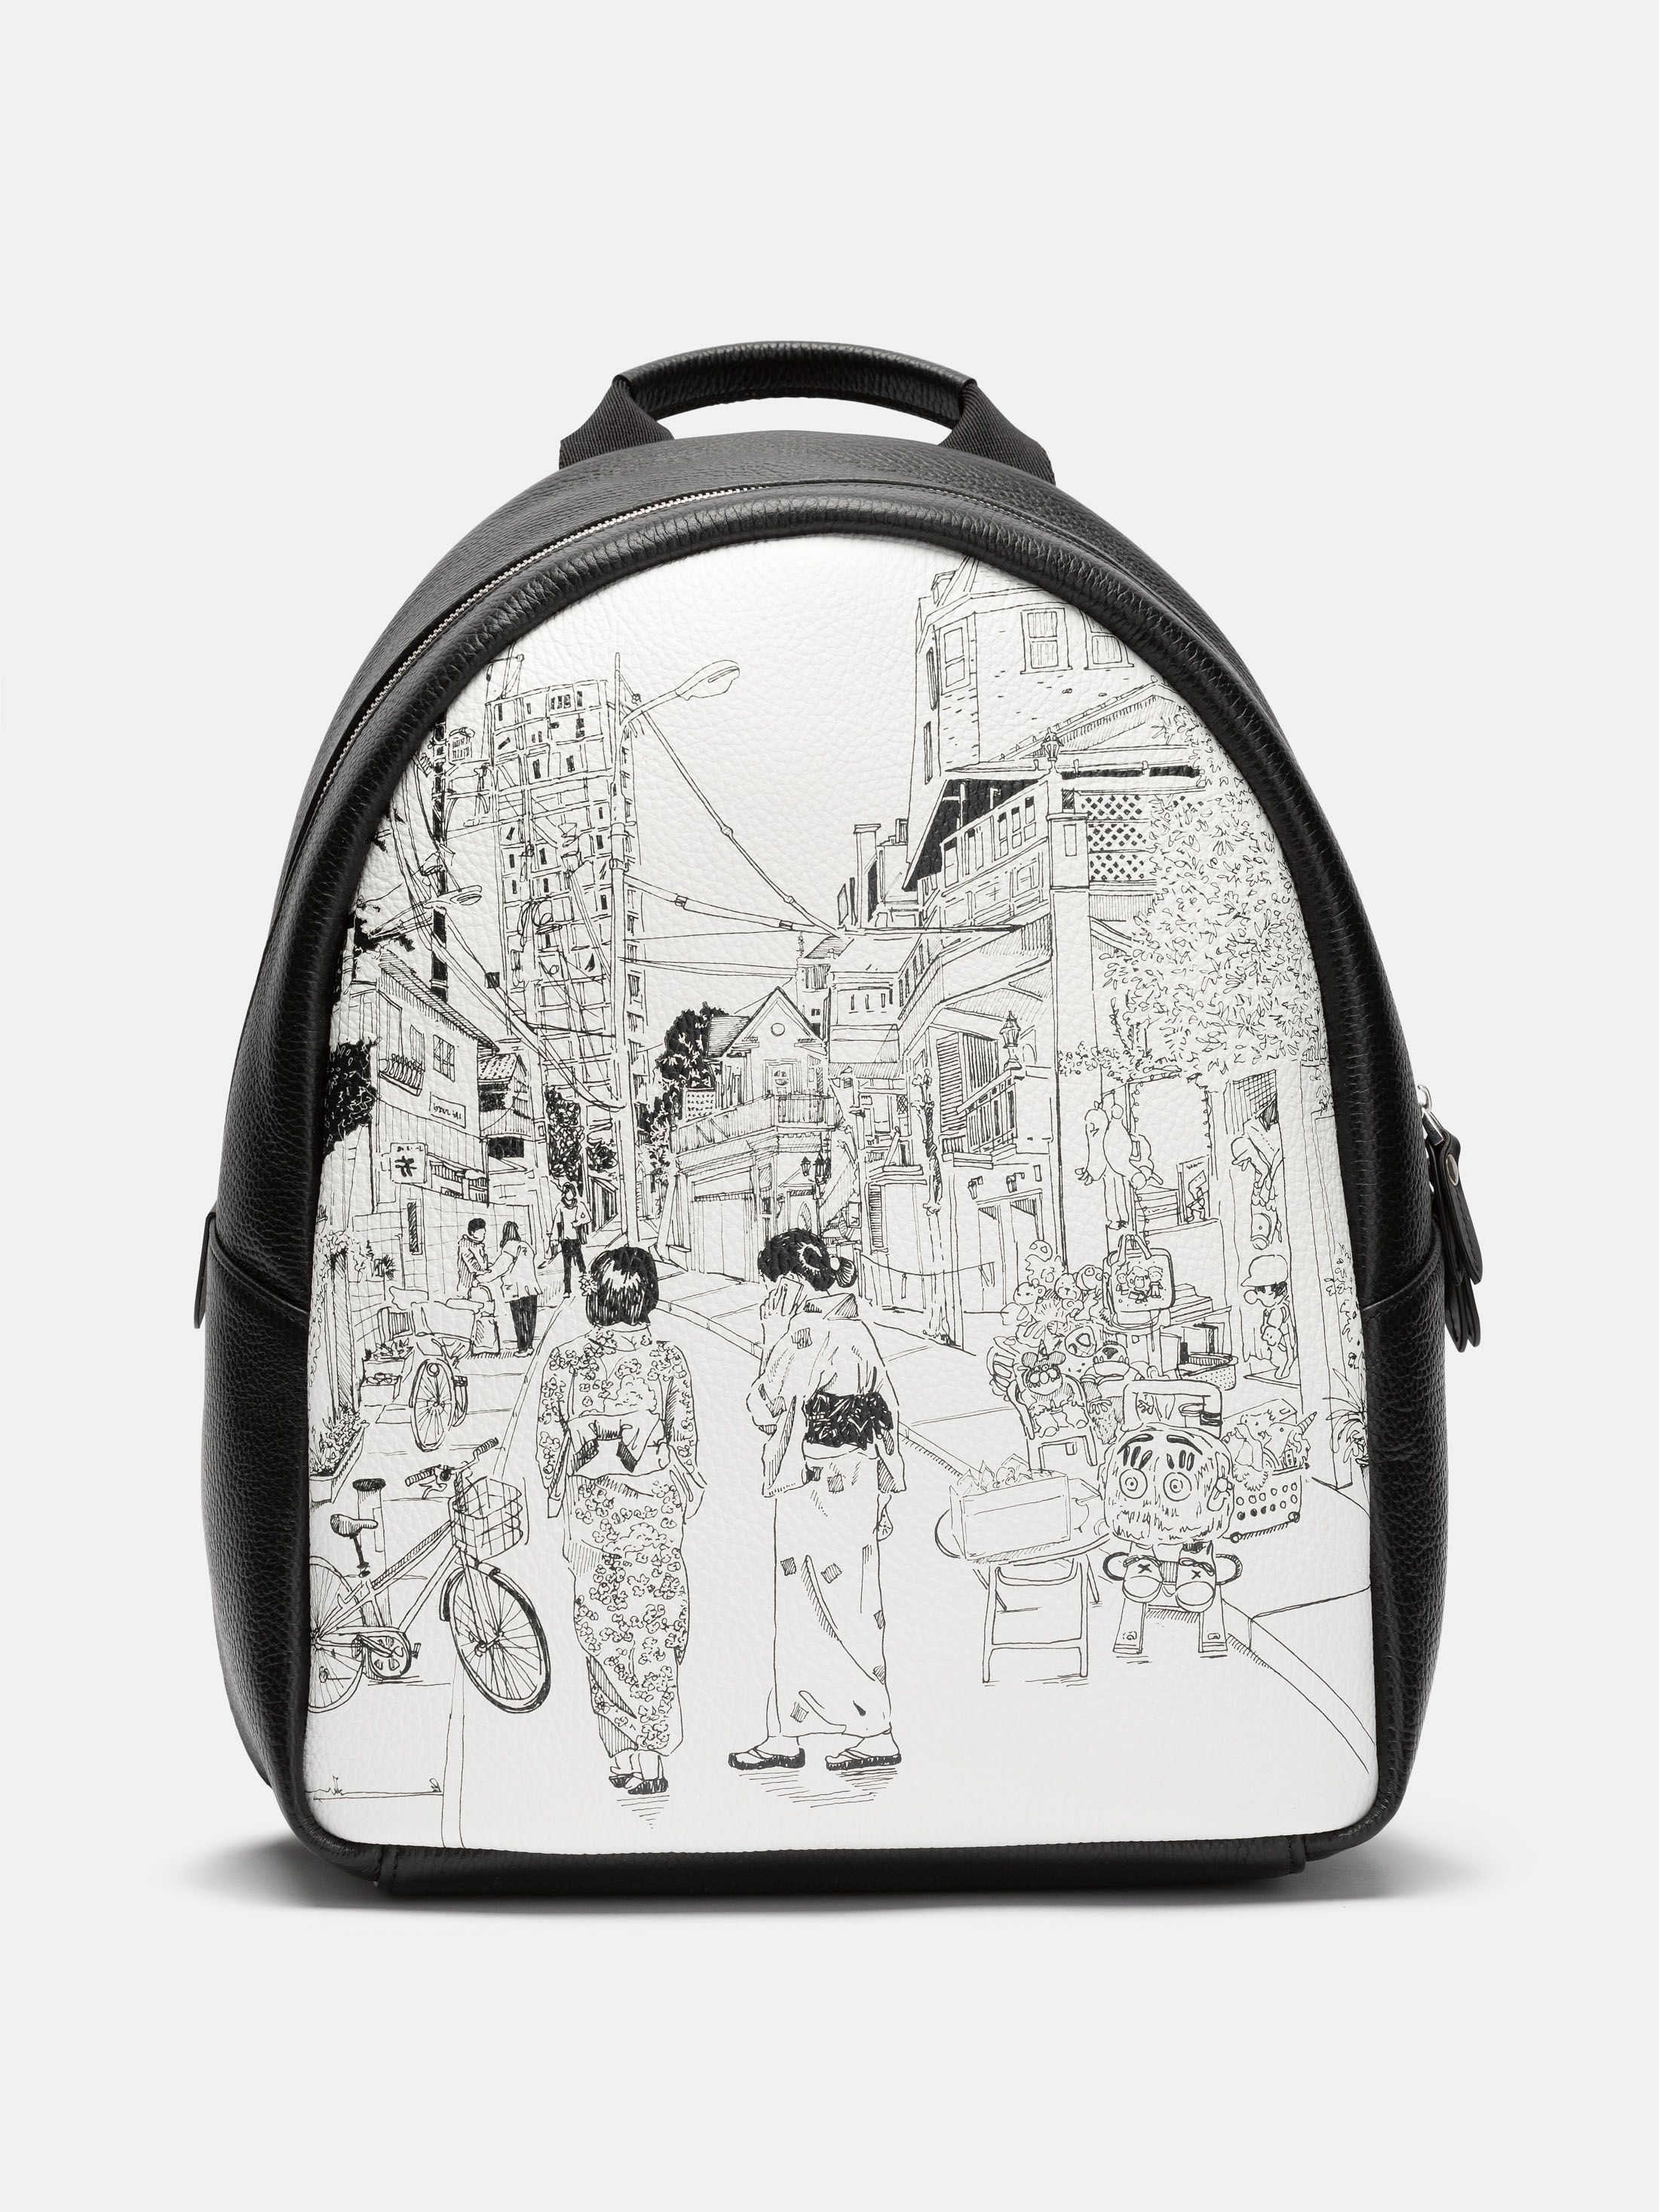 design custom made leather backpack